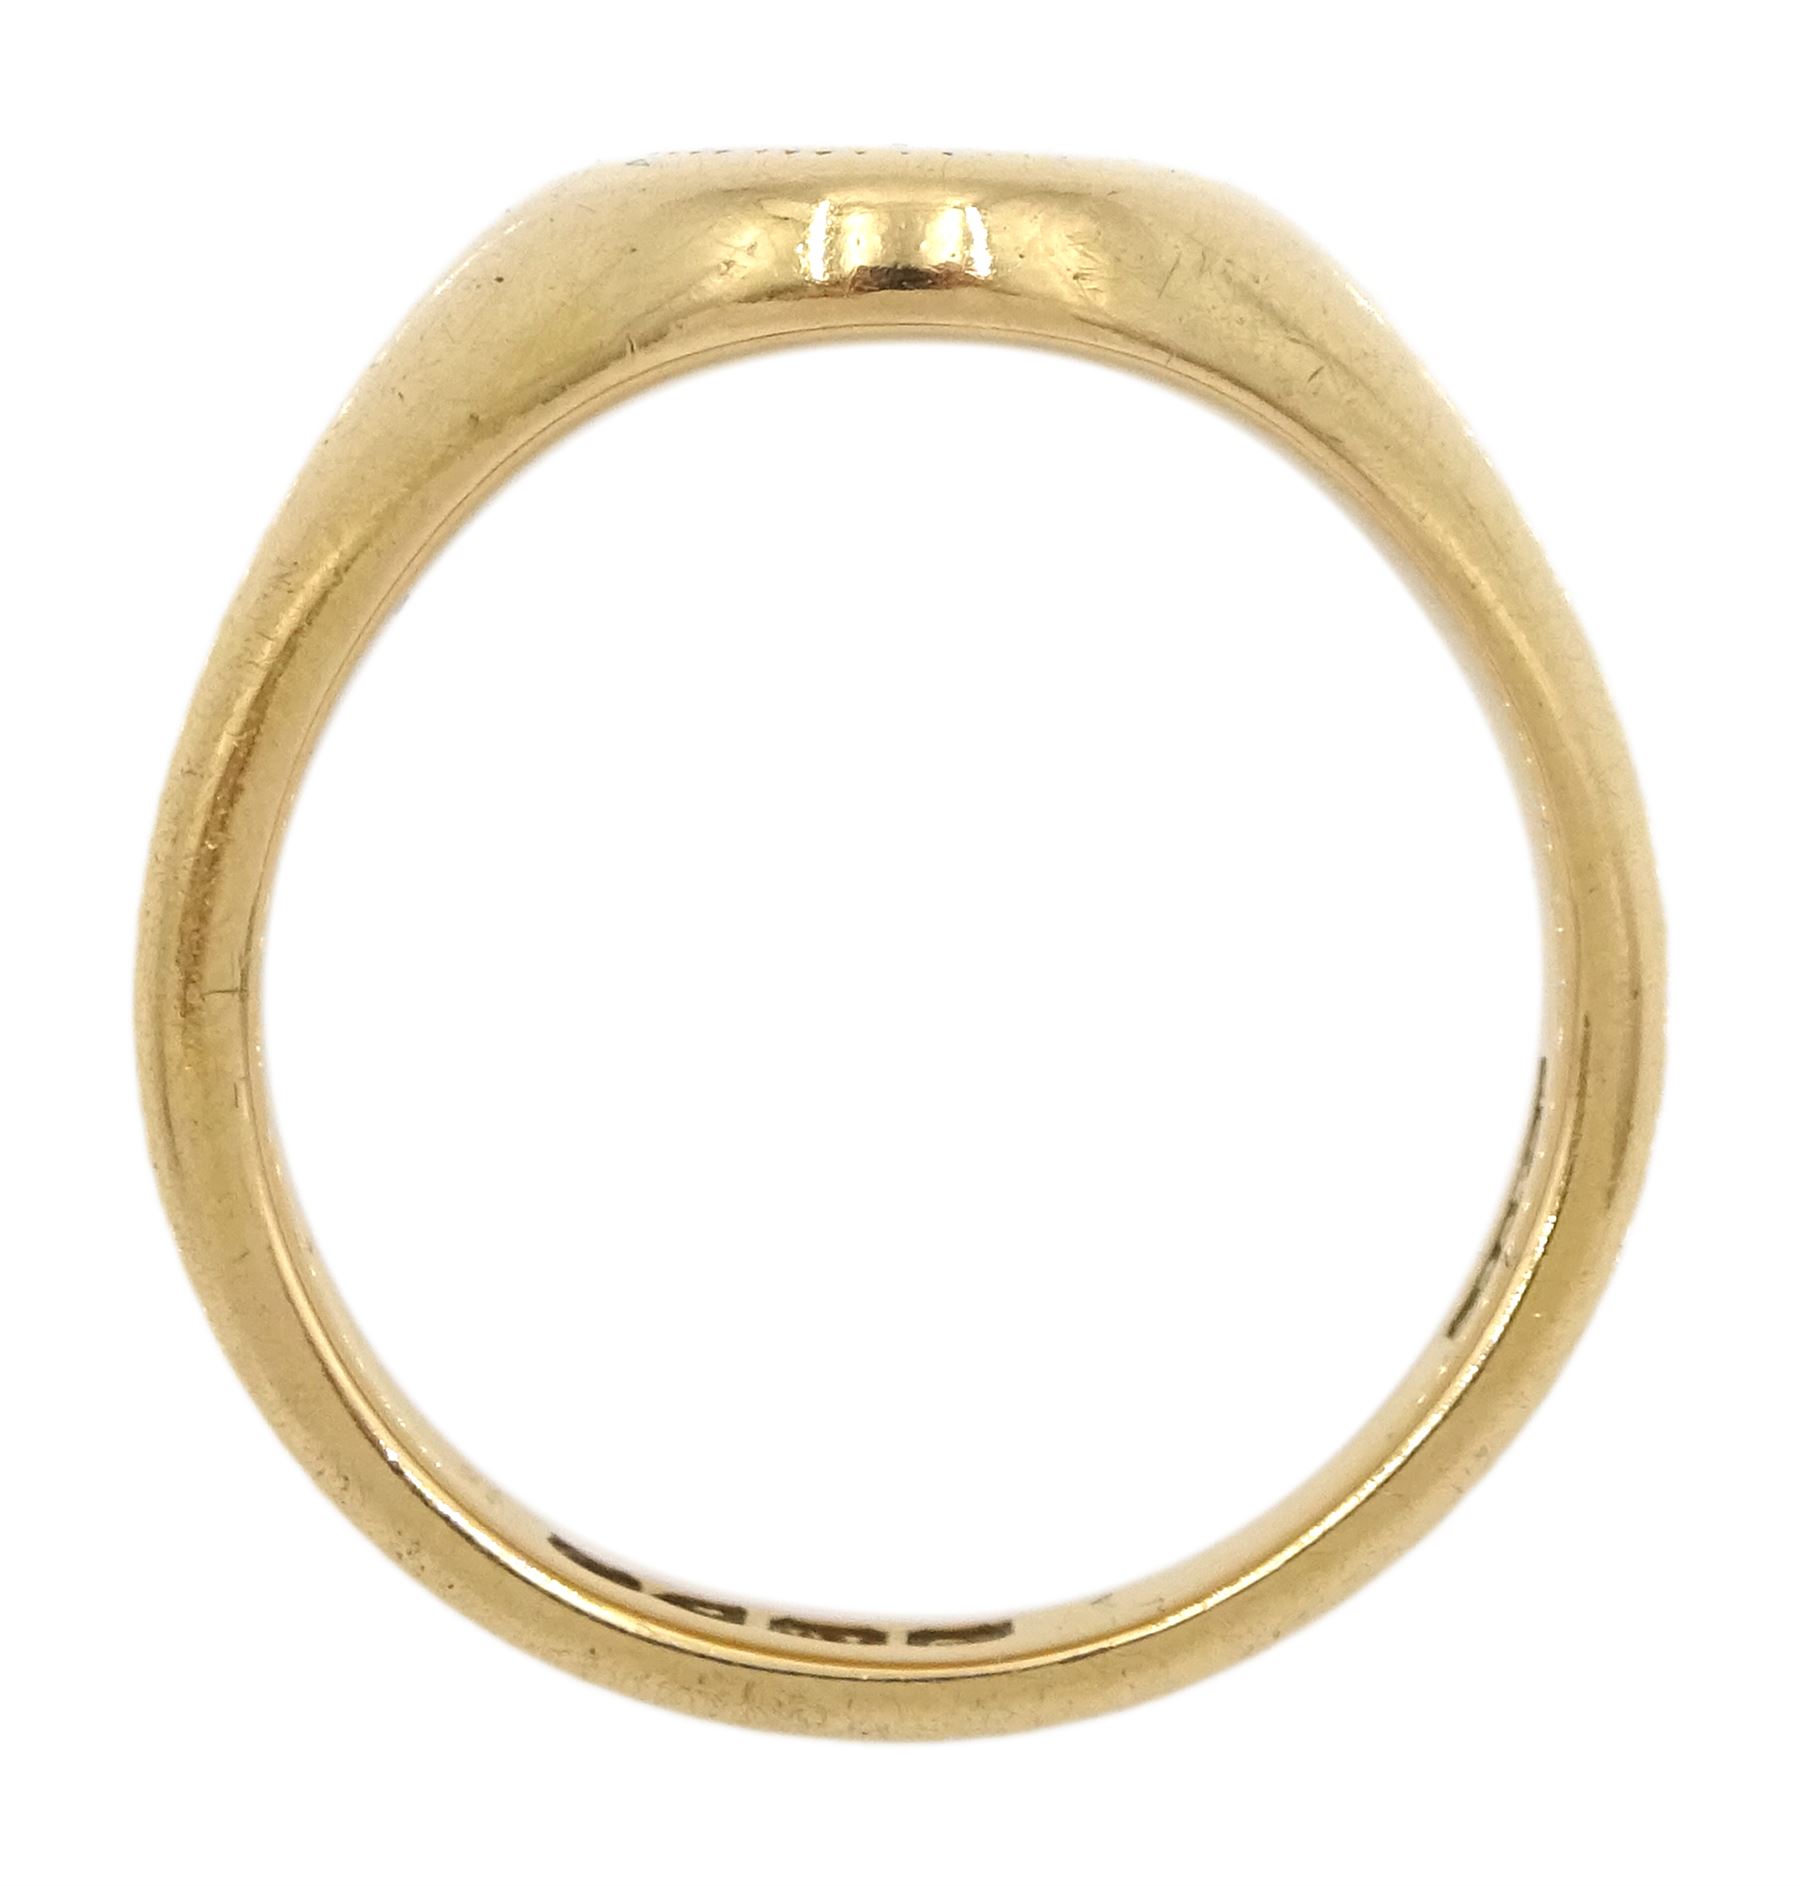 Edwardian 18ct gold signet ring - Image 4 of 4